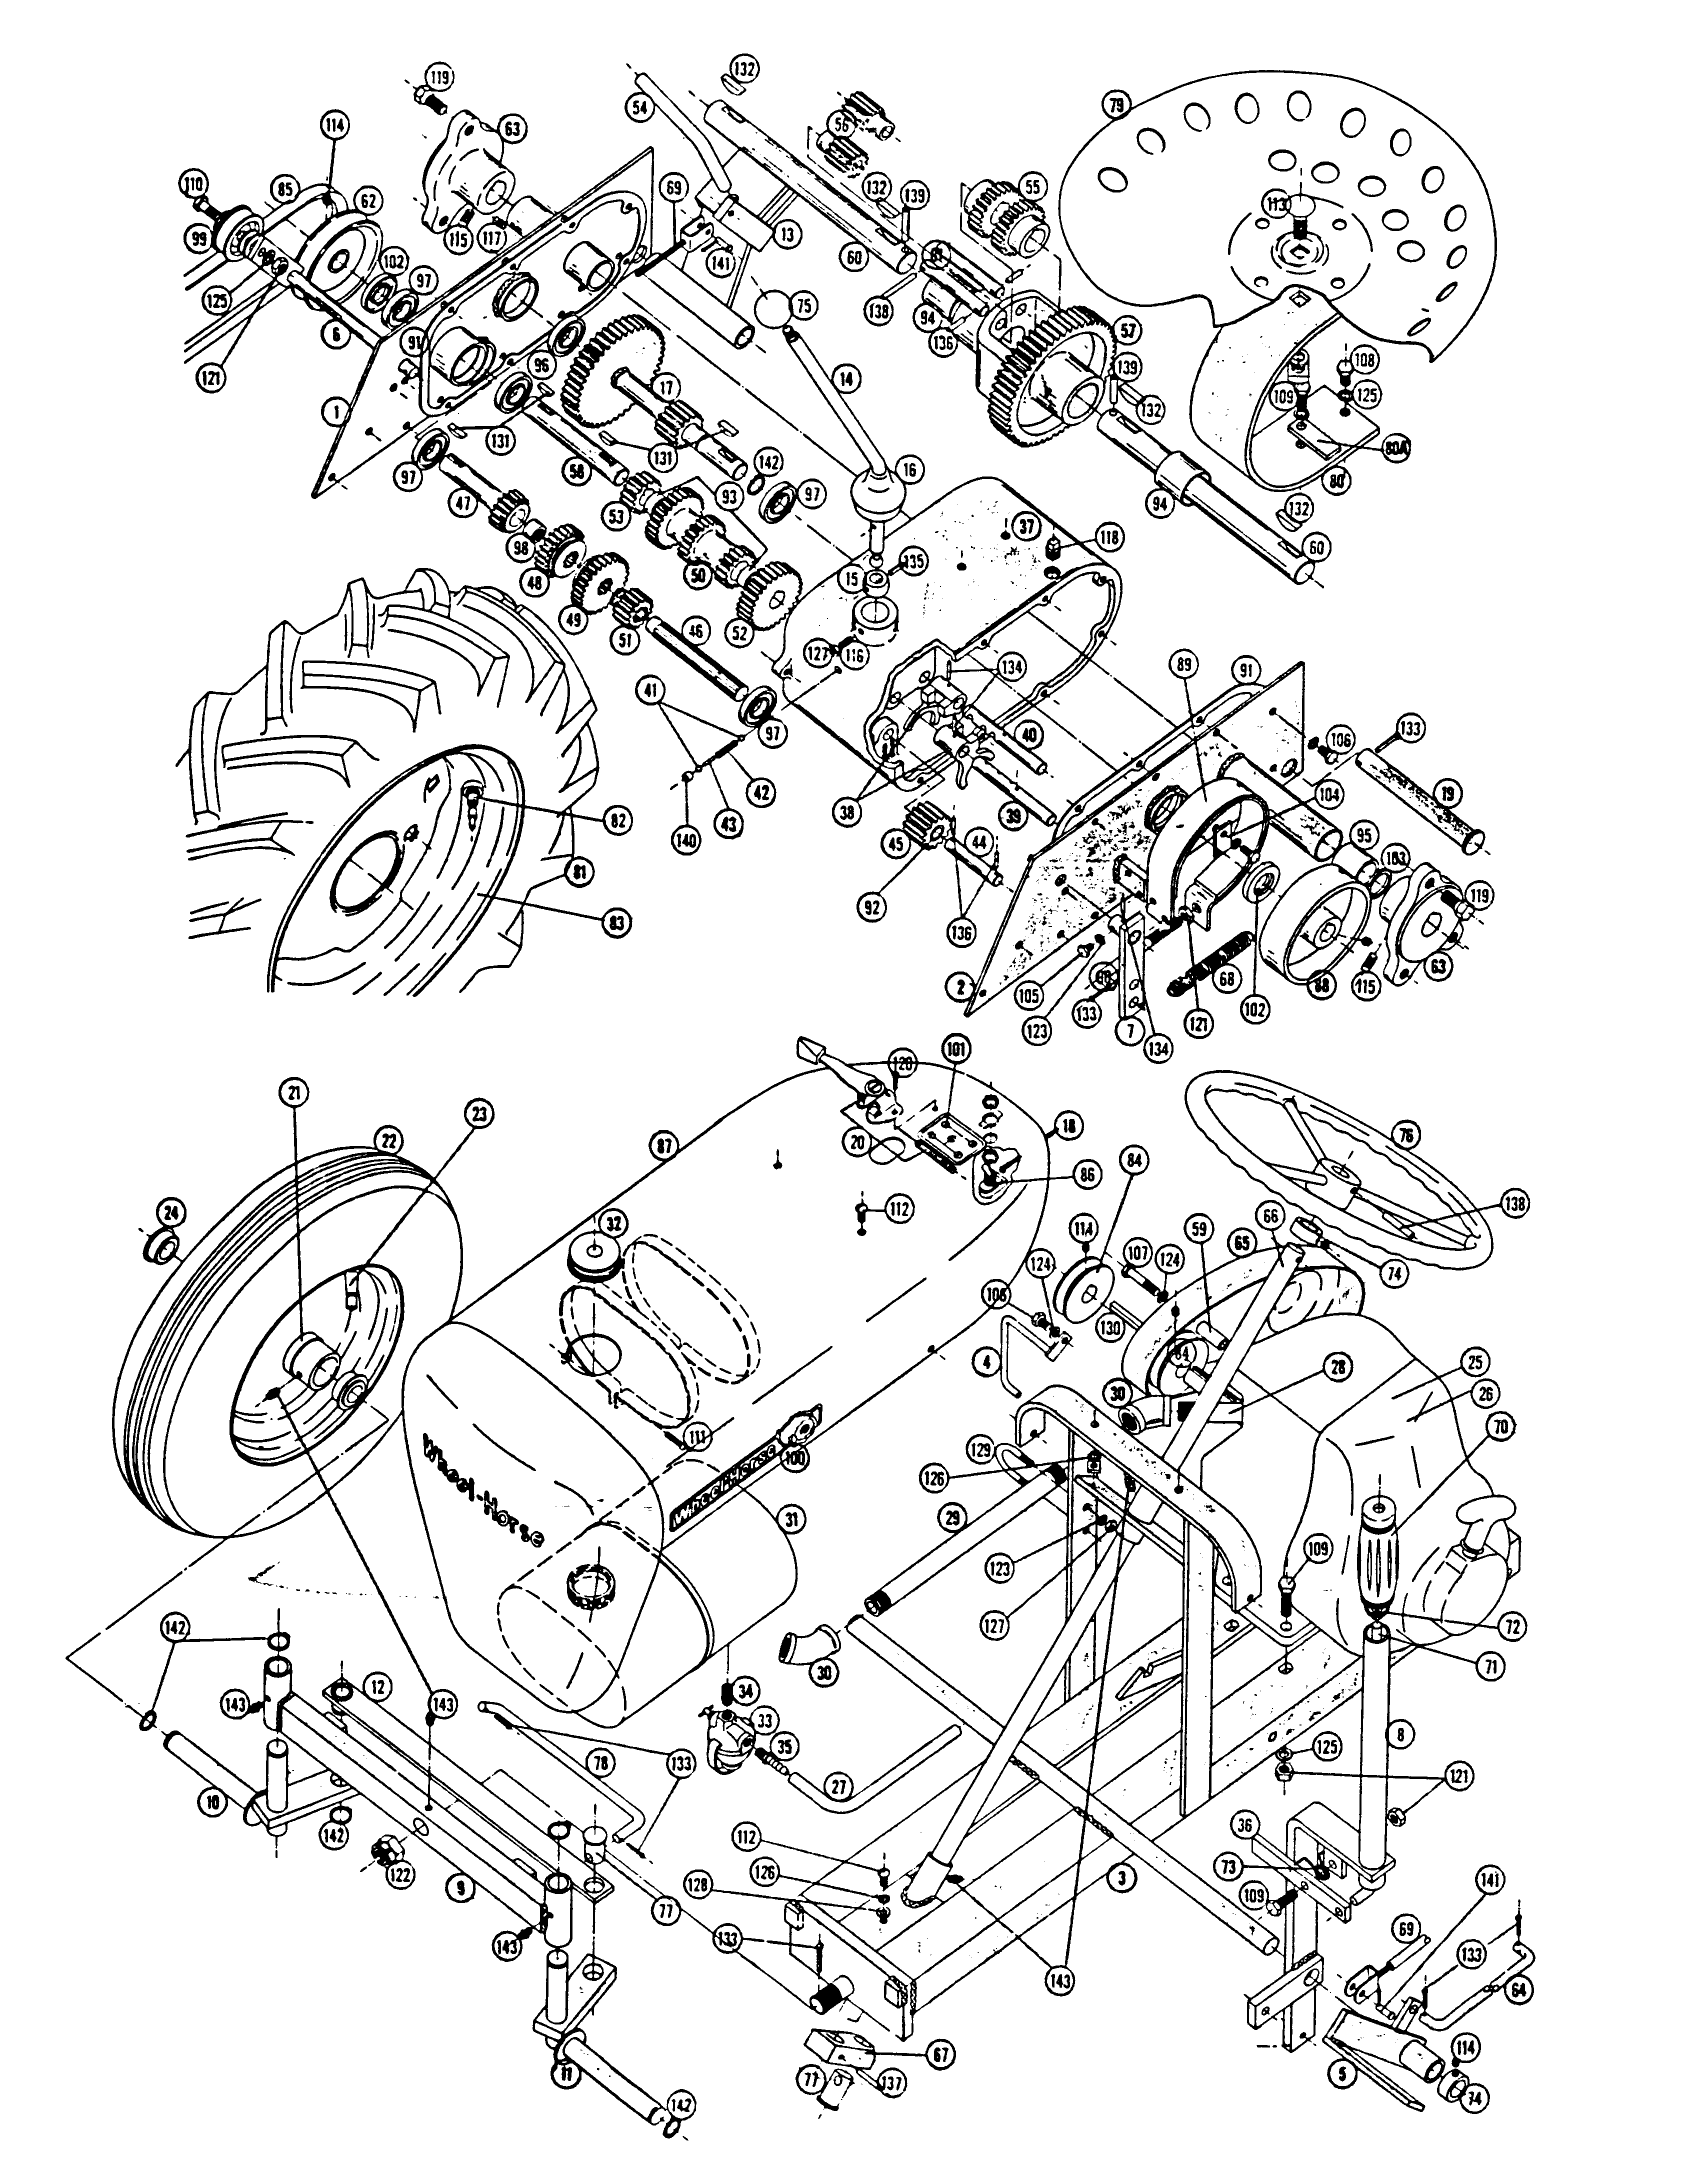 RJ58/59 Parts Breakdown